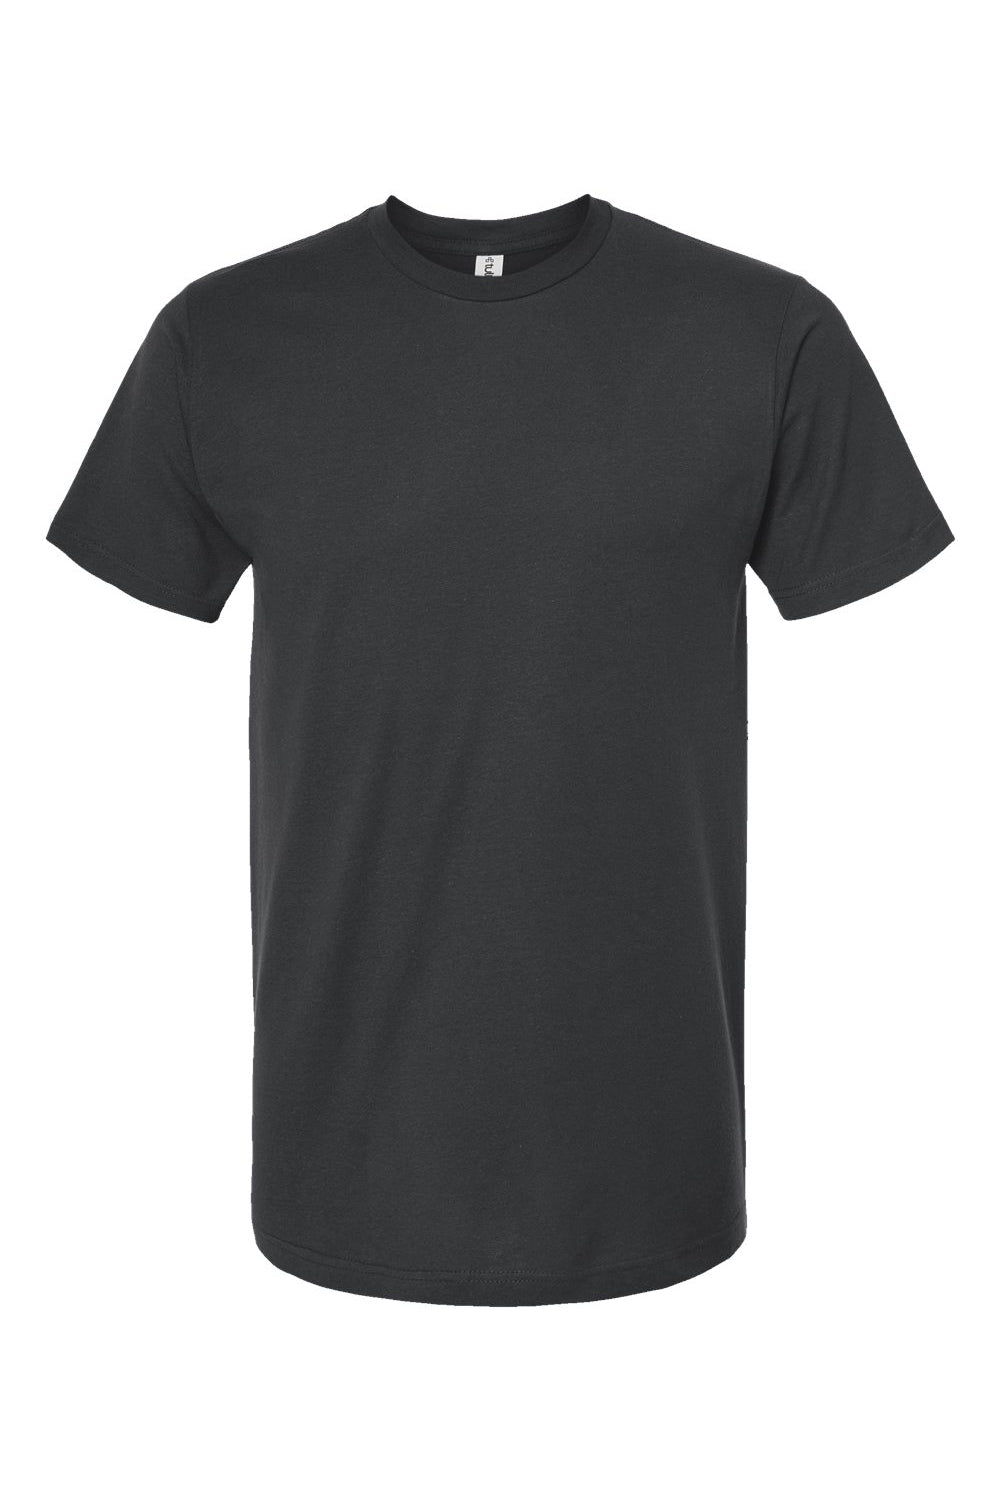 Tultex 202 Mens Fine Jersey Short Sleeve Crewneck T-Shirt Coal Grey Flat Front